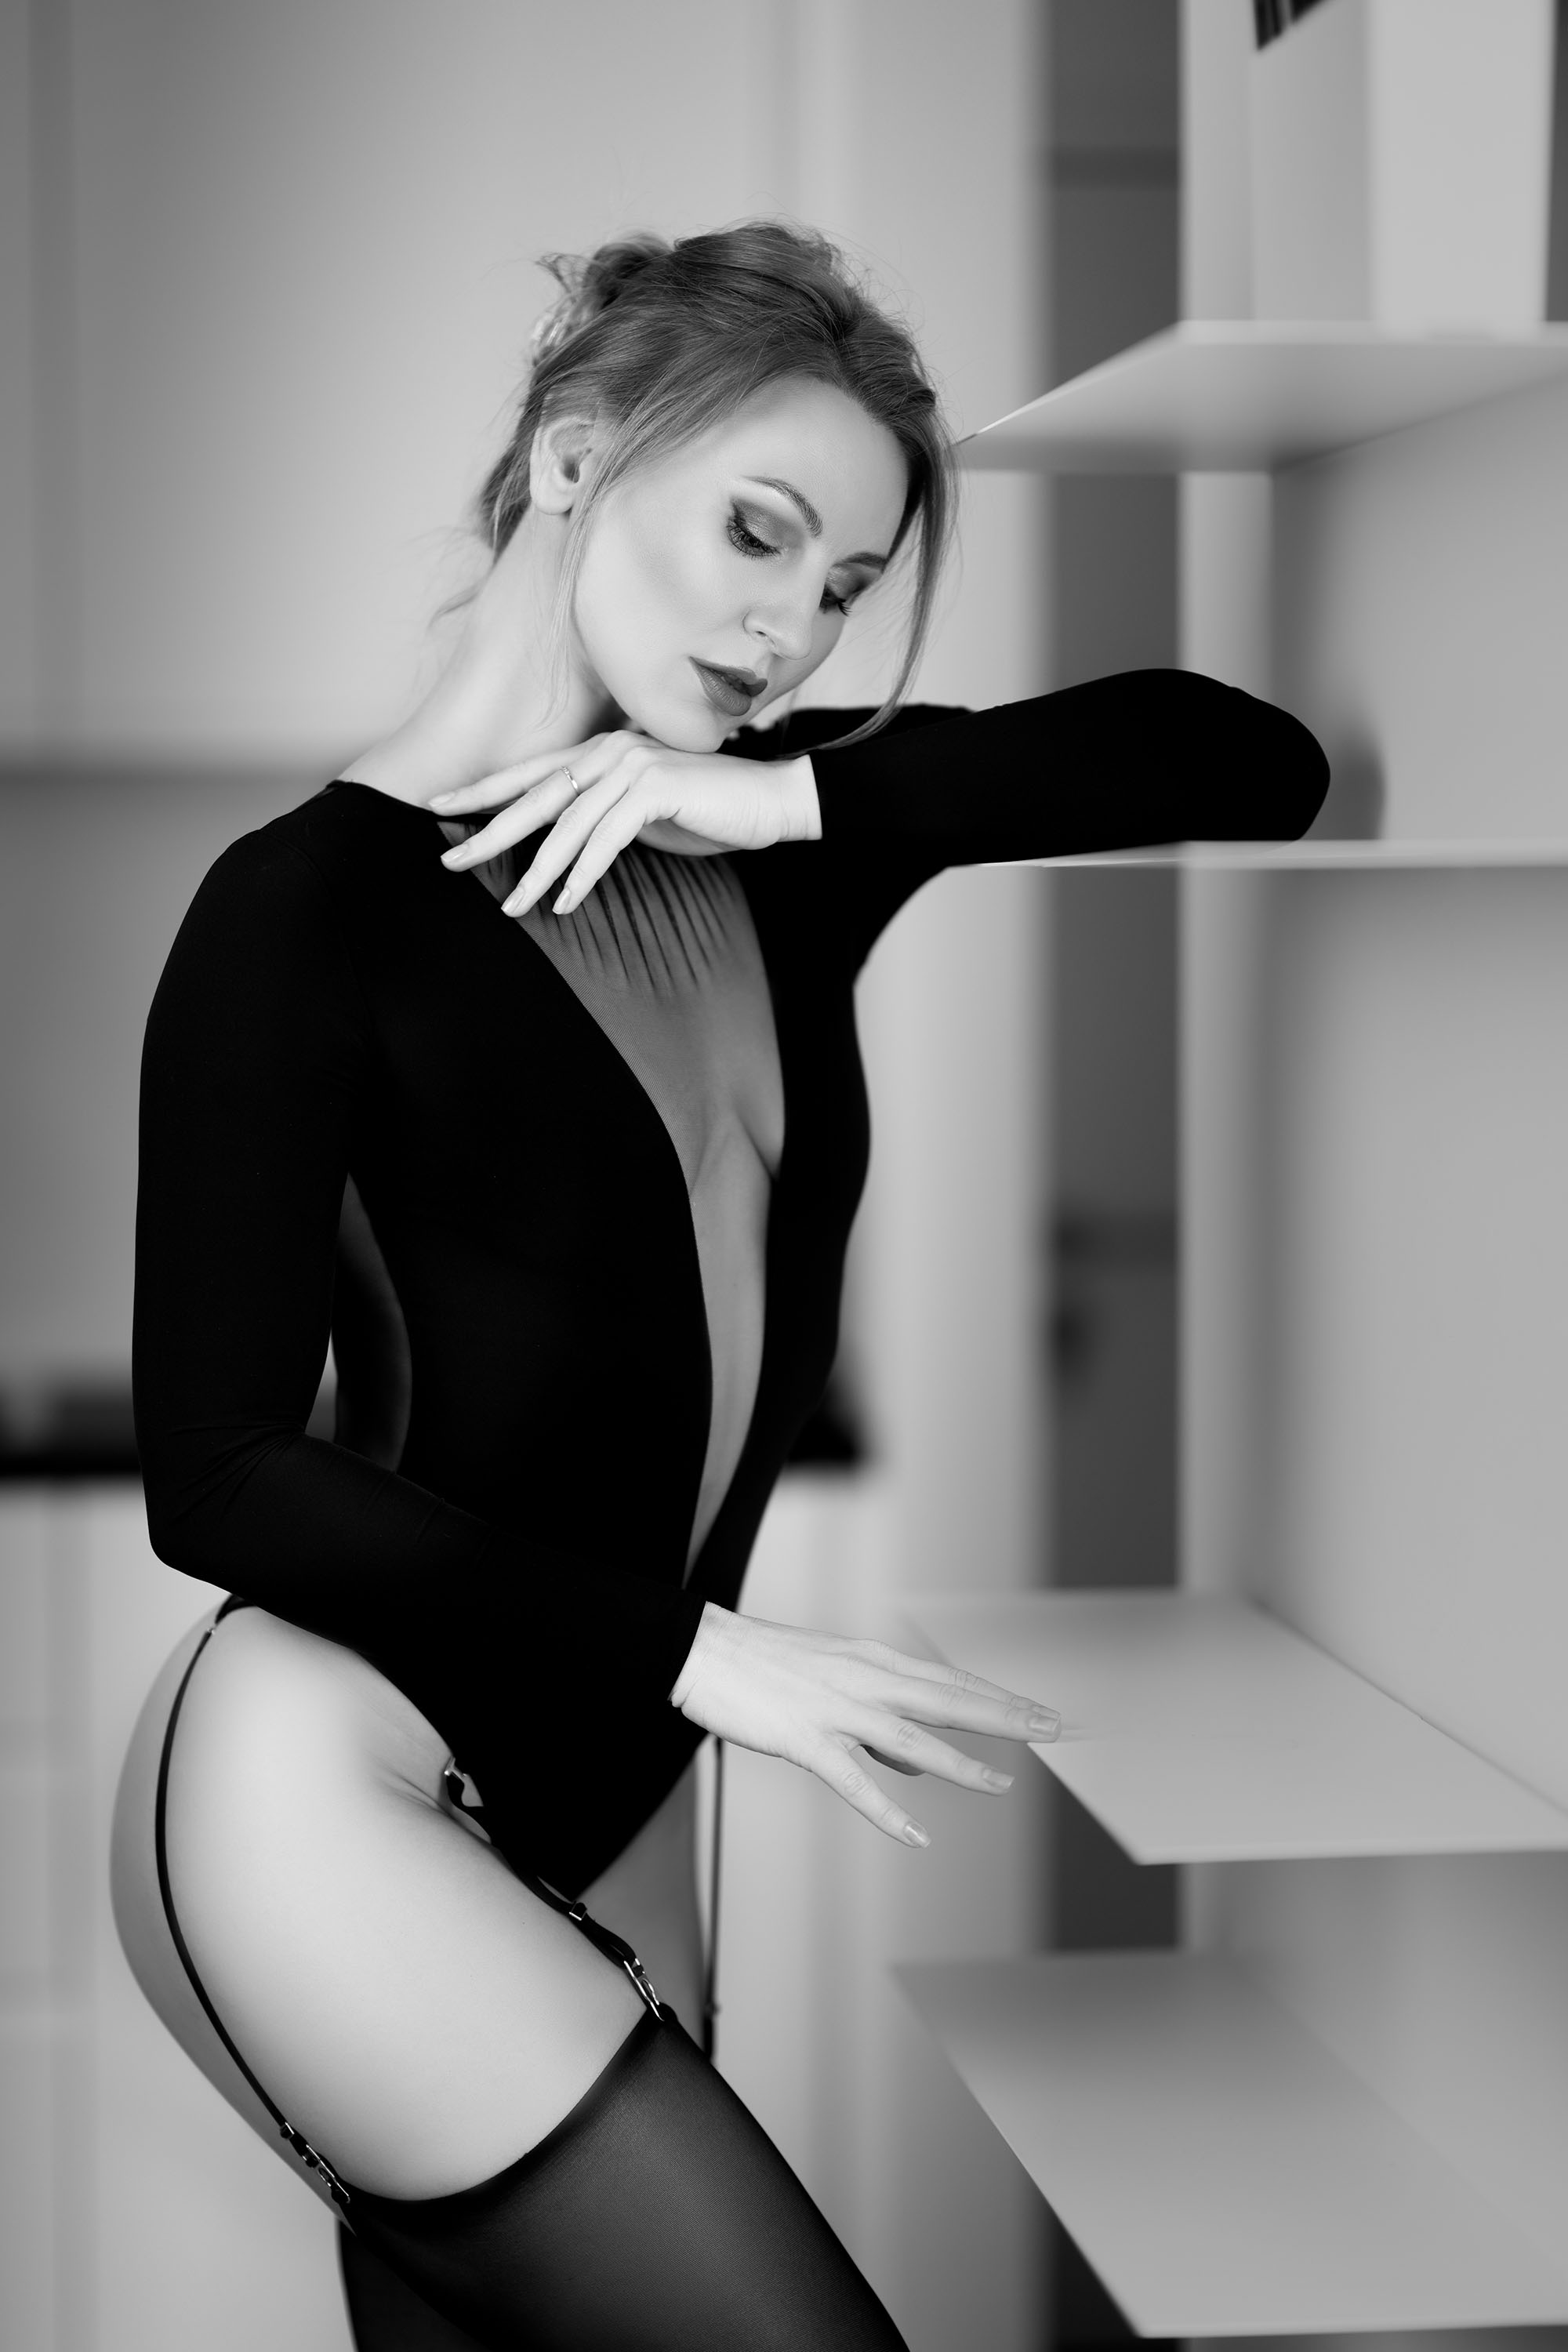 Jane B, model from Ukraine at a boudoir photoshoot